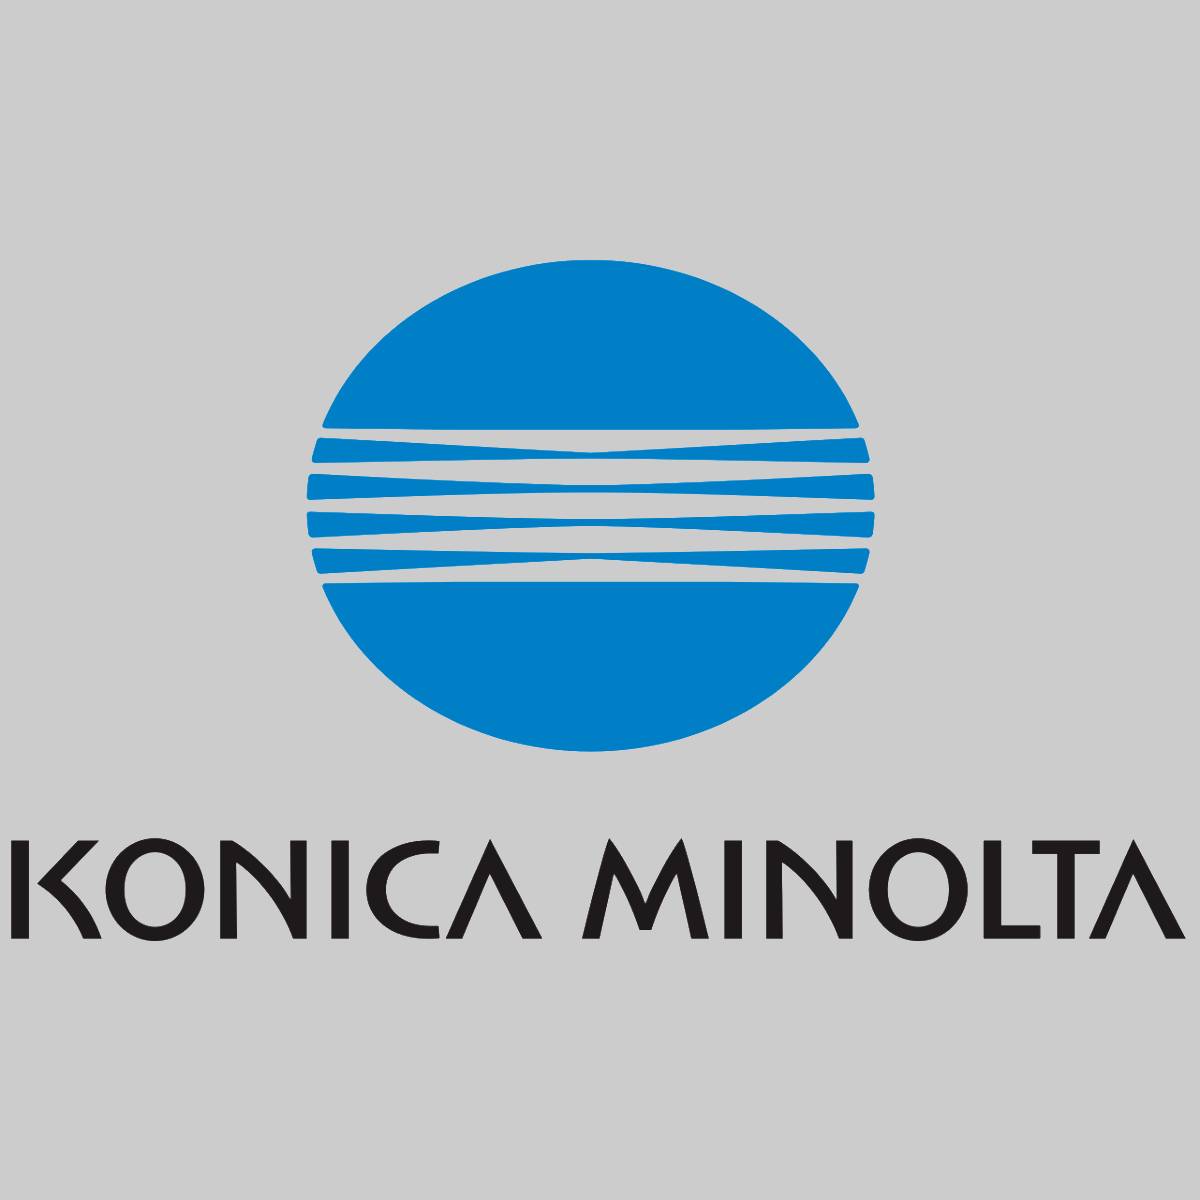 "Originele Konica Minolta Developer DV310 Developer voor Bizhub 200 250350 Nieuwe OV